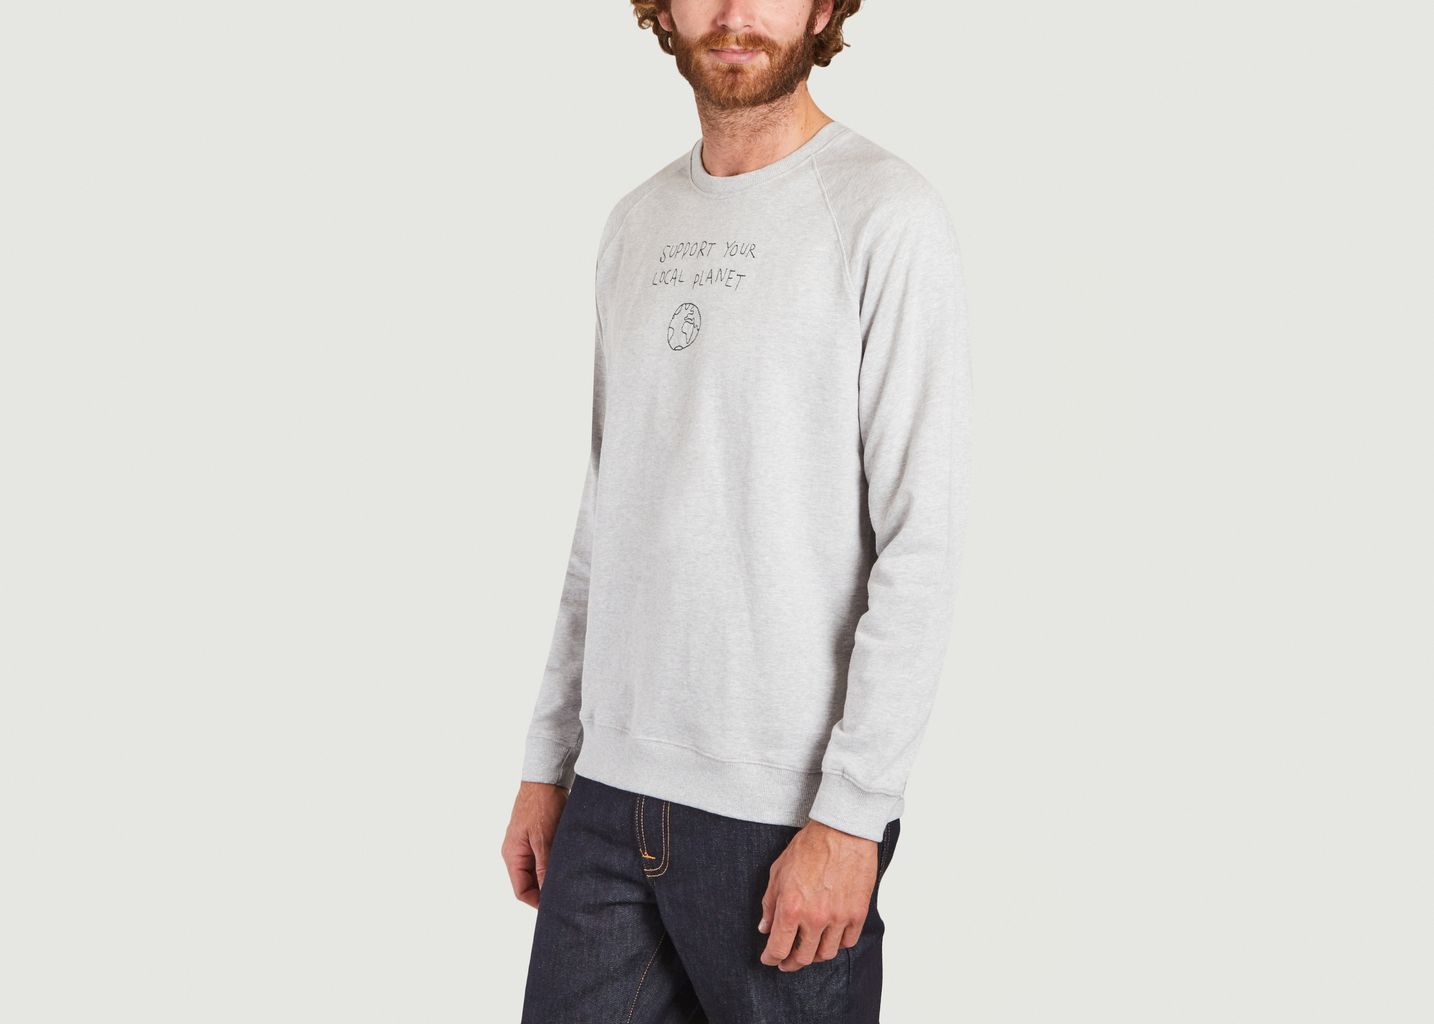 Sweatshirt brodé Malmoe Local Planet - Dedicated Brand